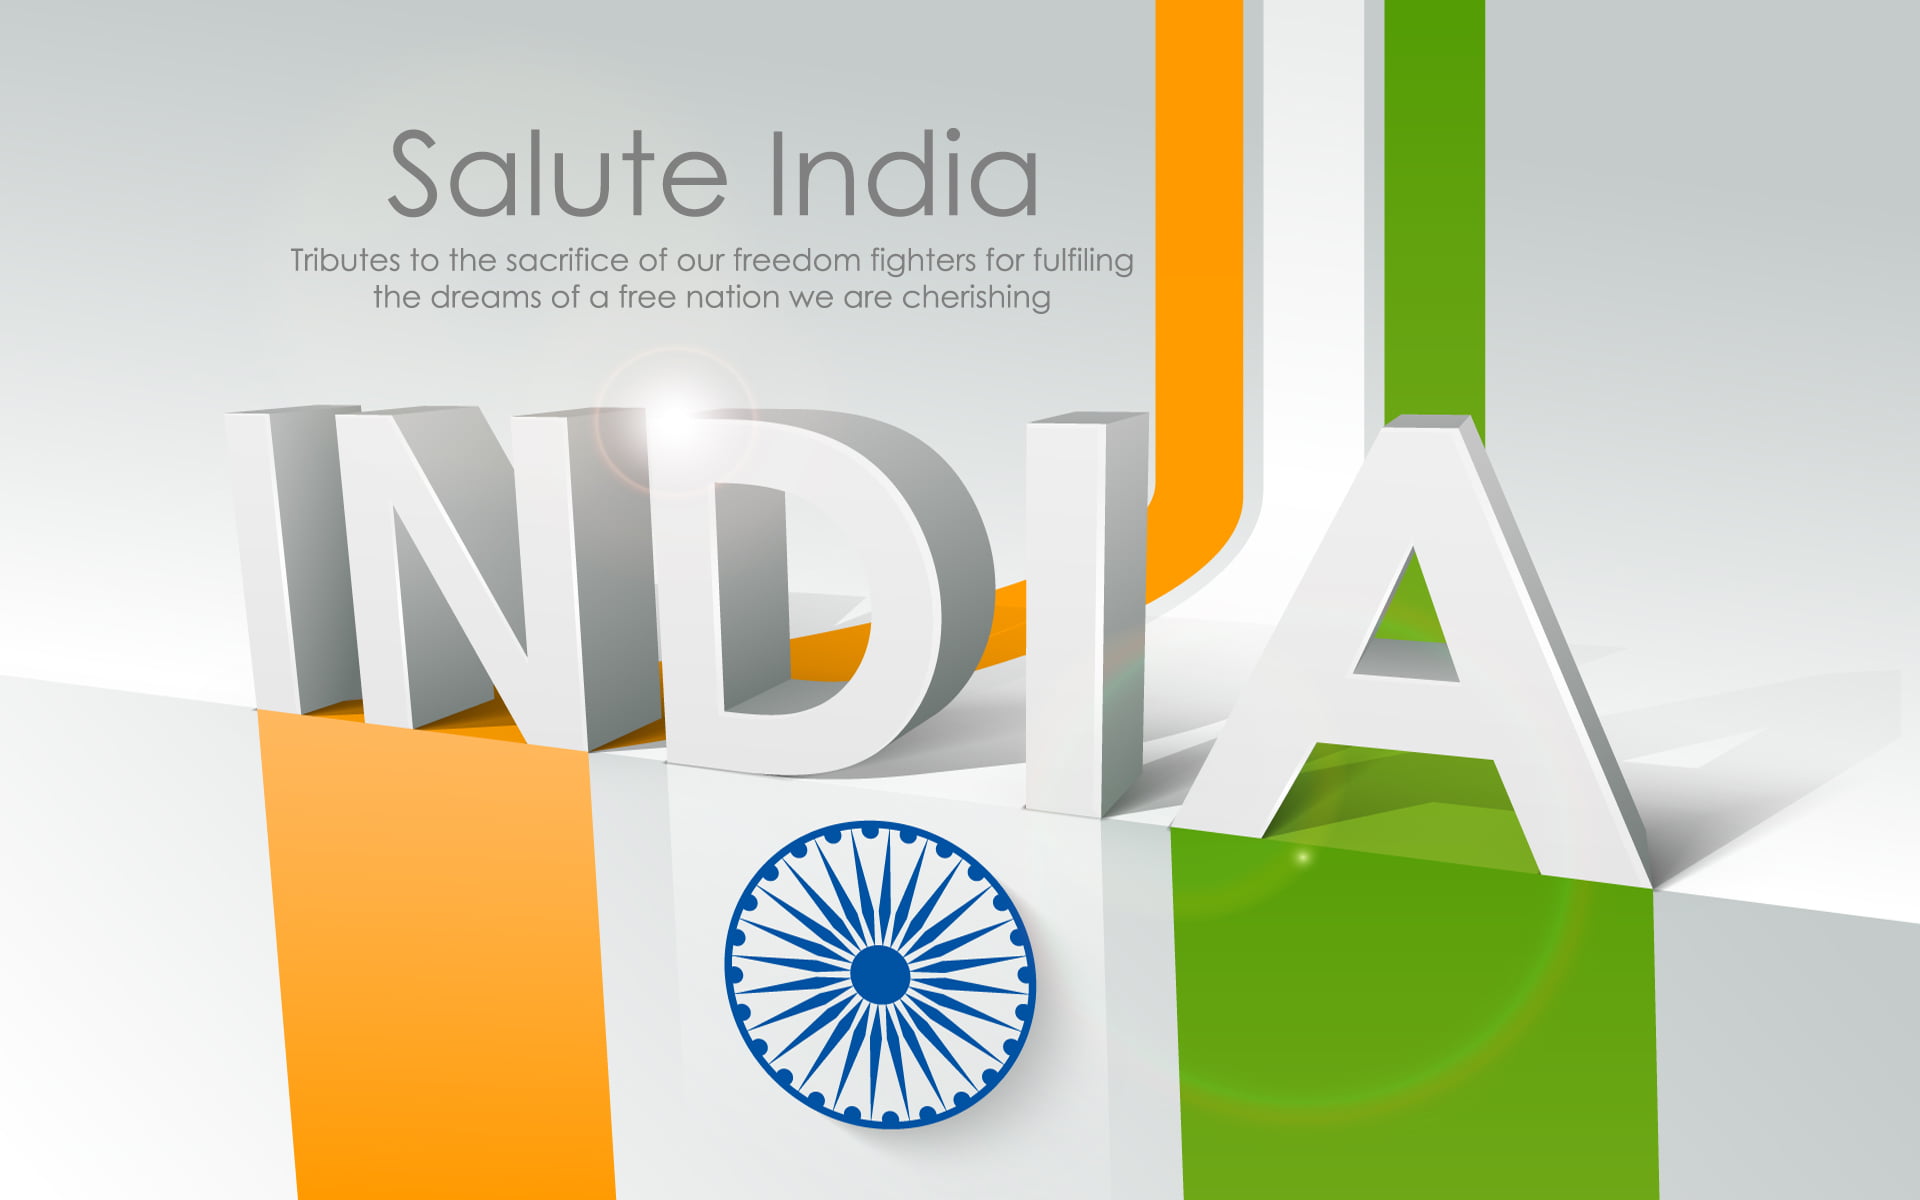 Salute India Republic Day, India text overlay, Festivals / Holidays